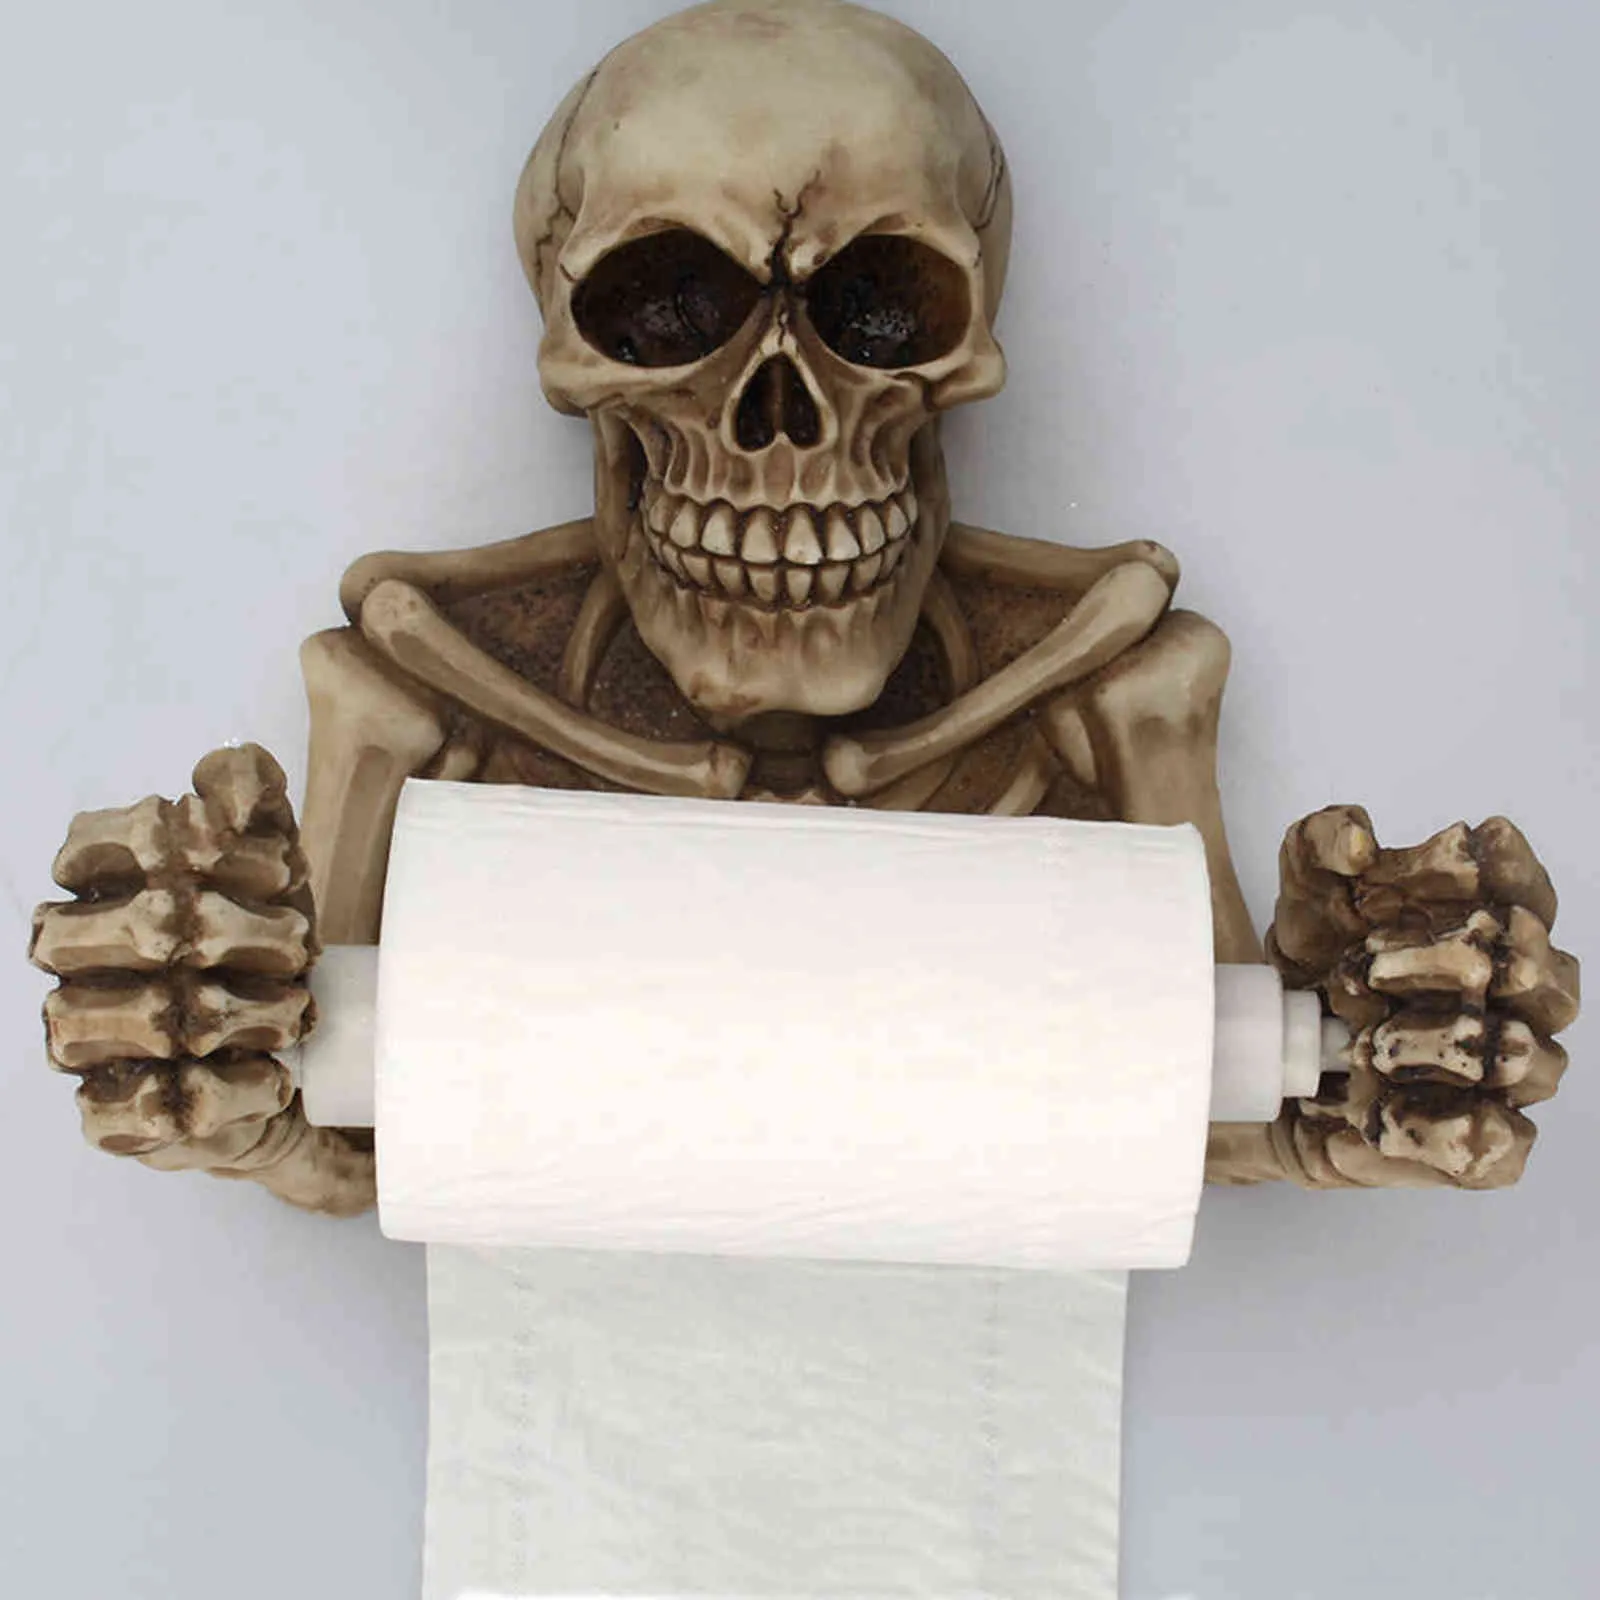 Skull Shape Paper Holder Resin Tissue Holder Wall Hanging Toilet Pumping Roll Paper Rack Halloween Party Decor H1112